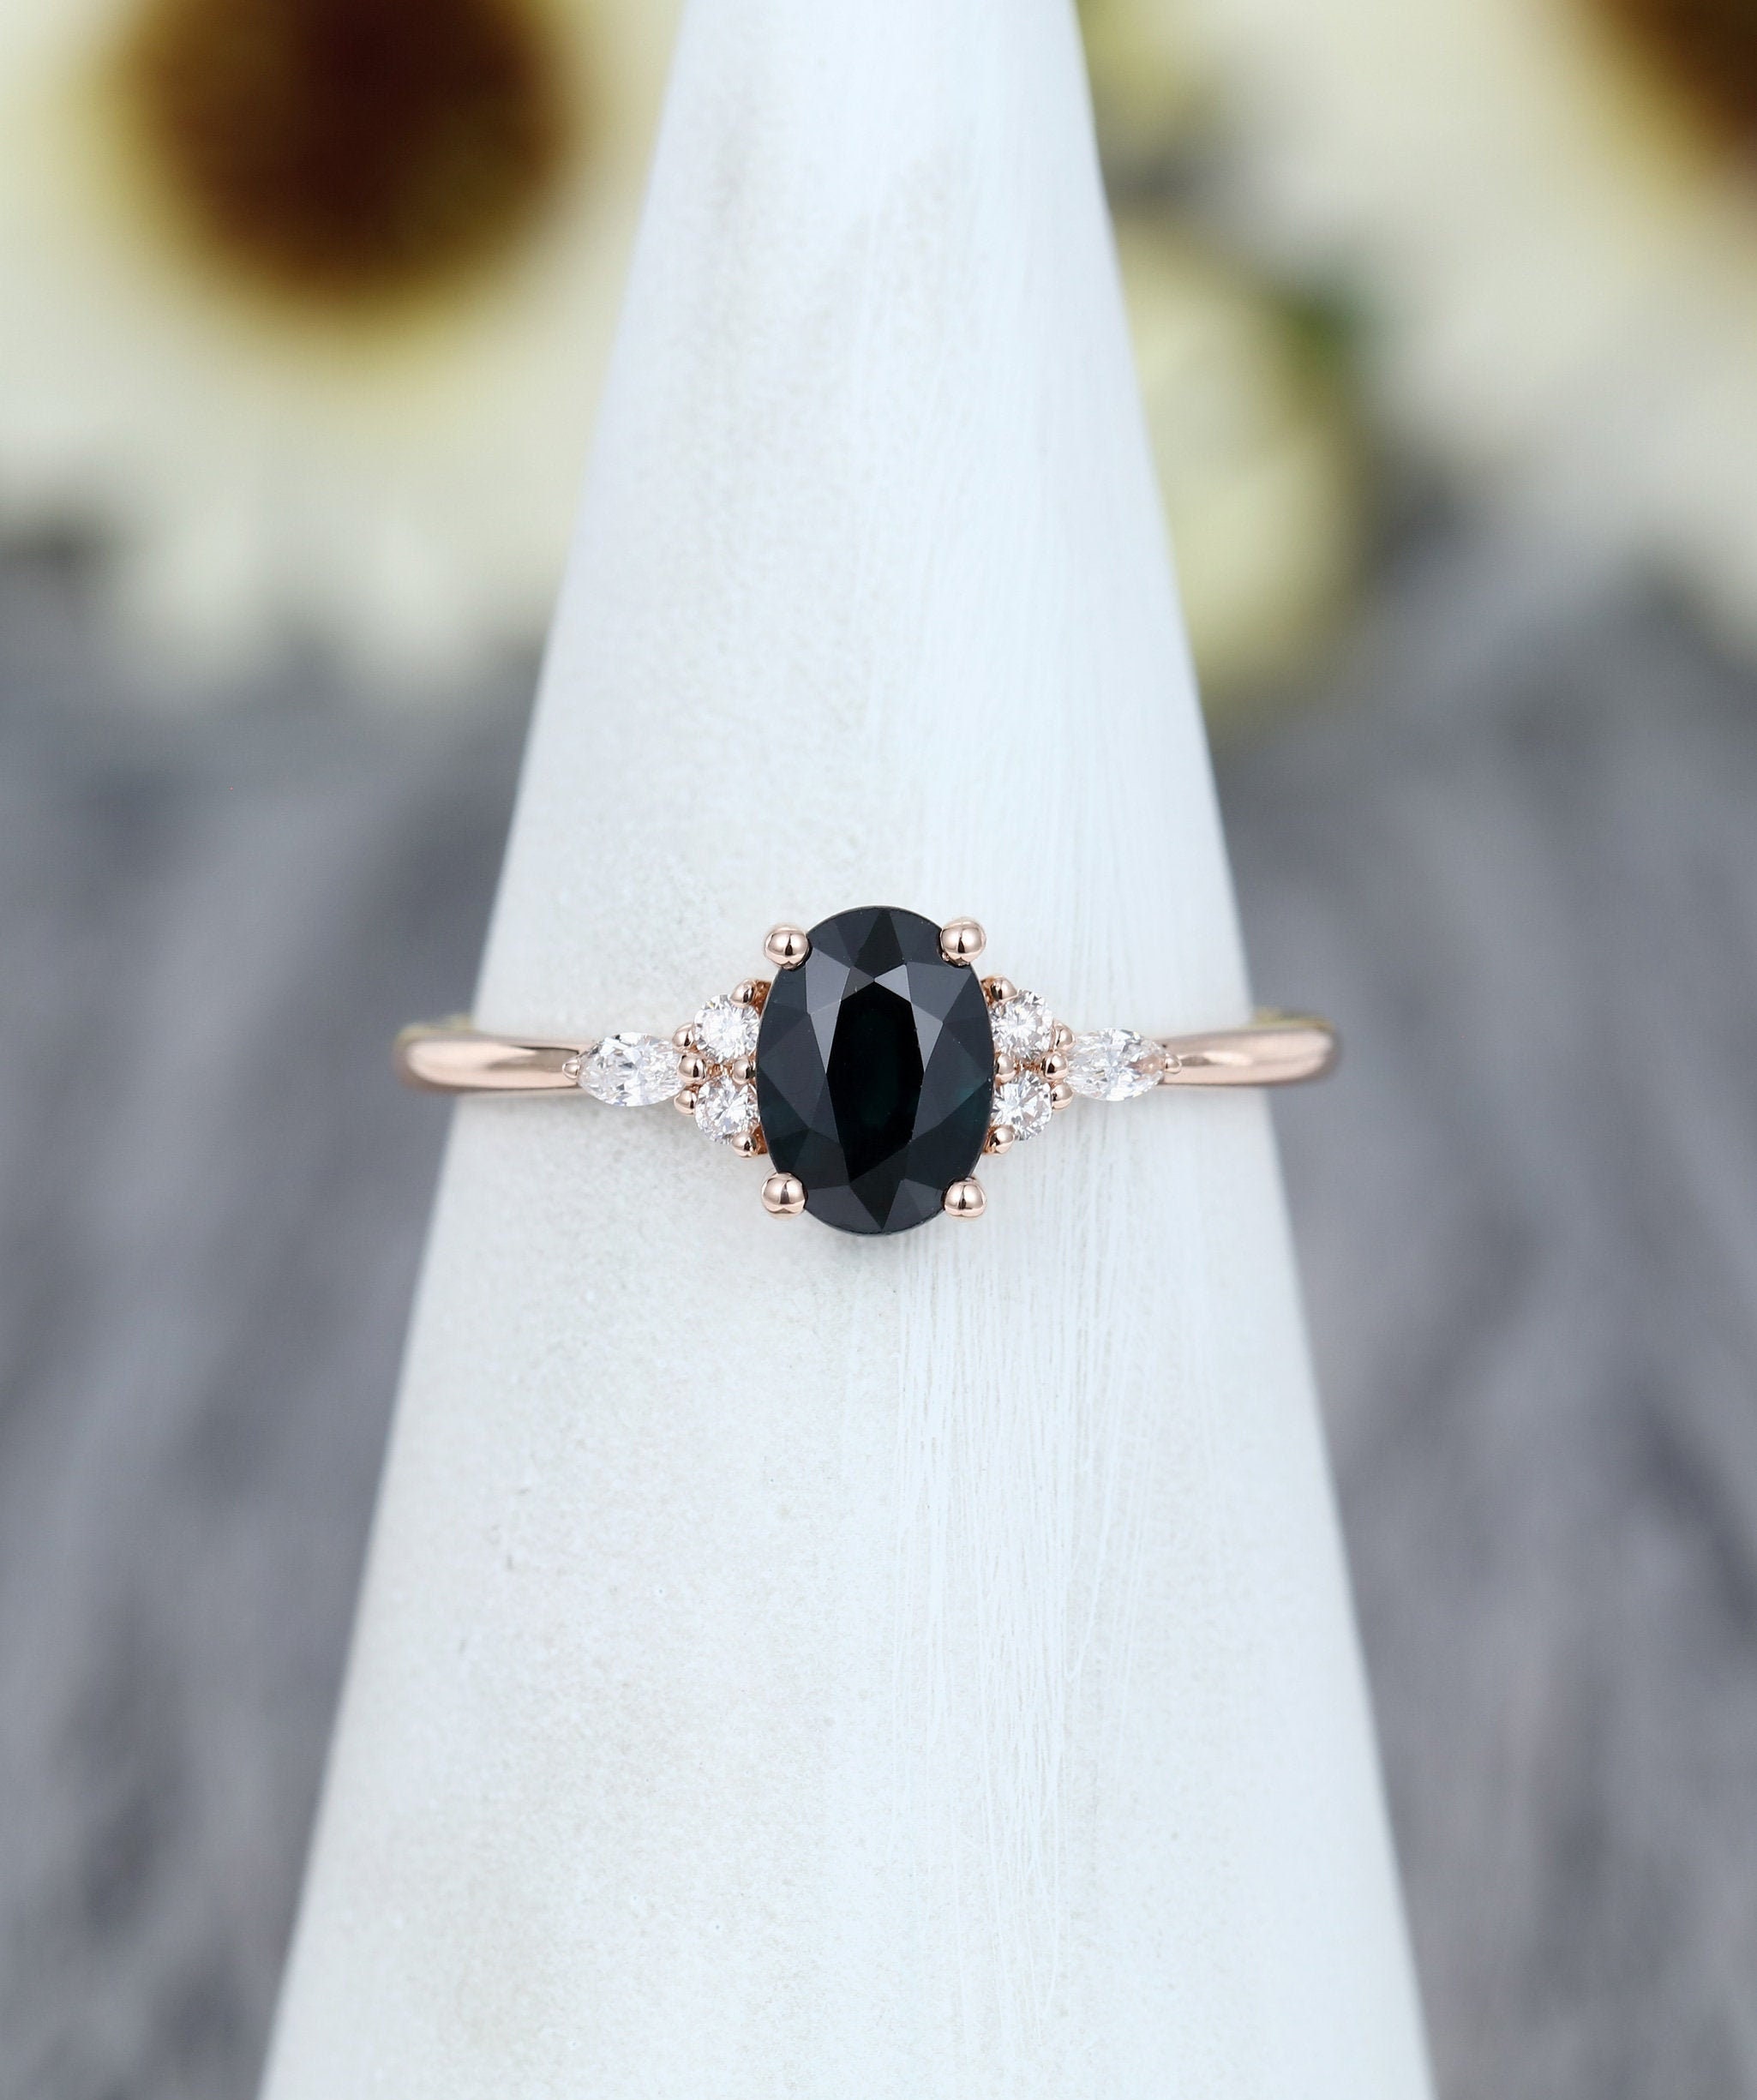 Black Sapphire engagement ring simple vintage white gold black | Etsy